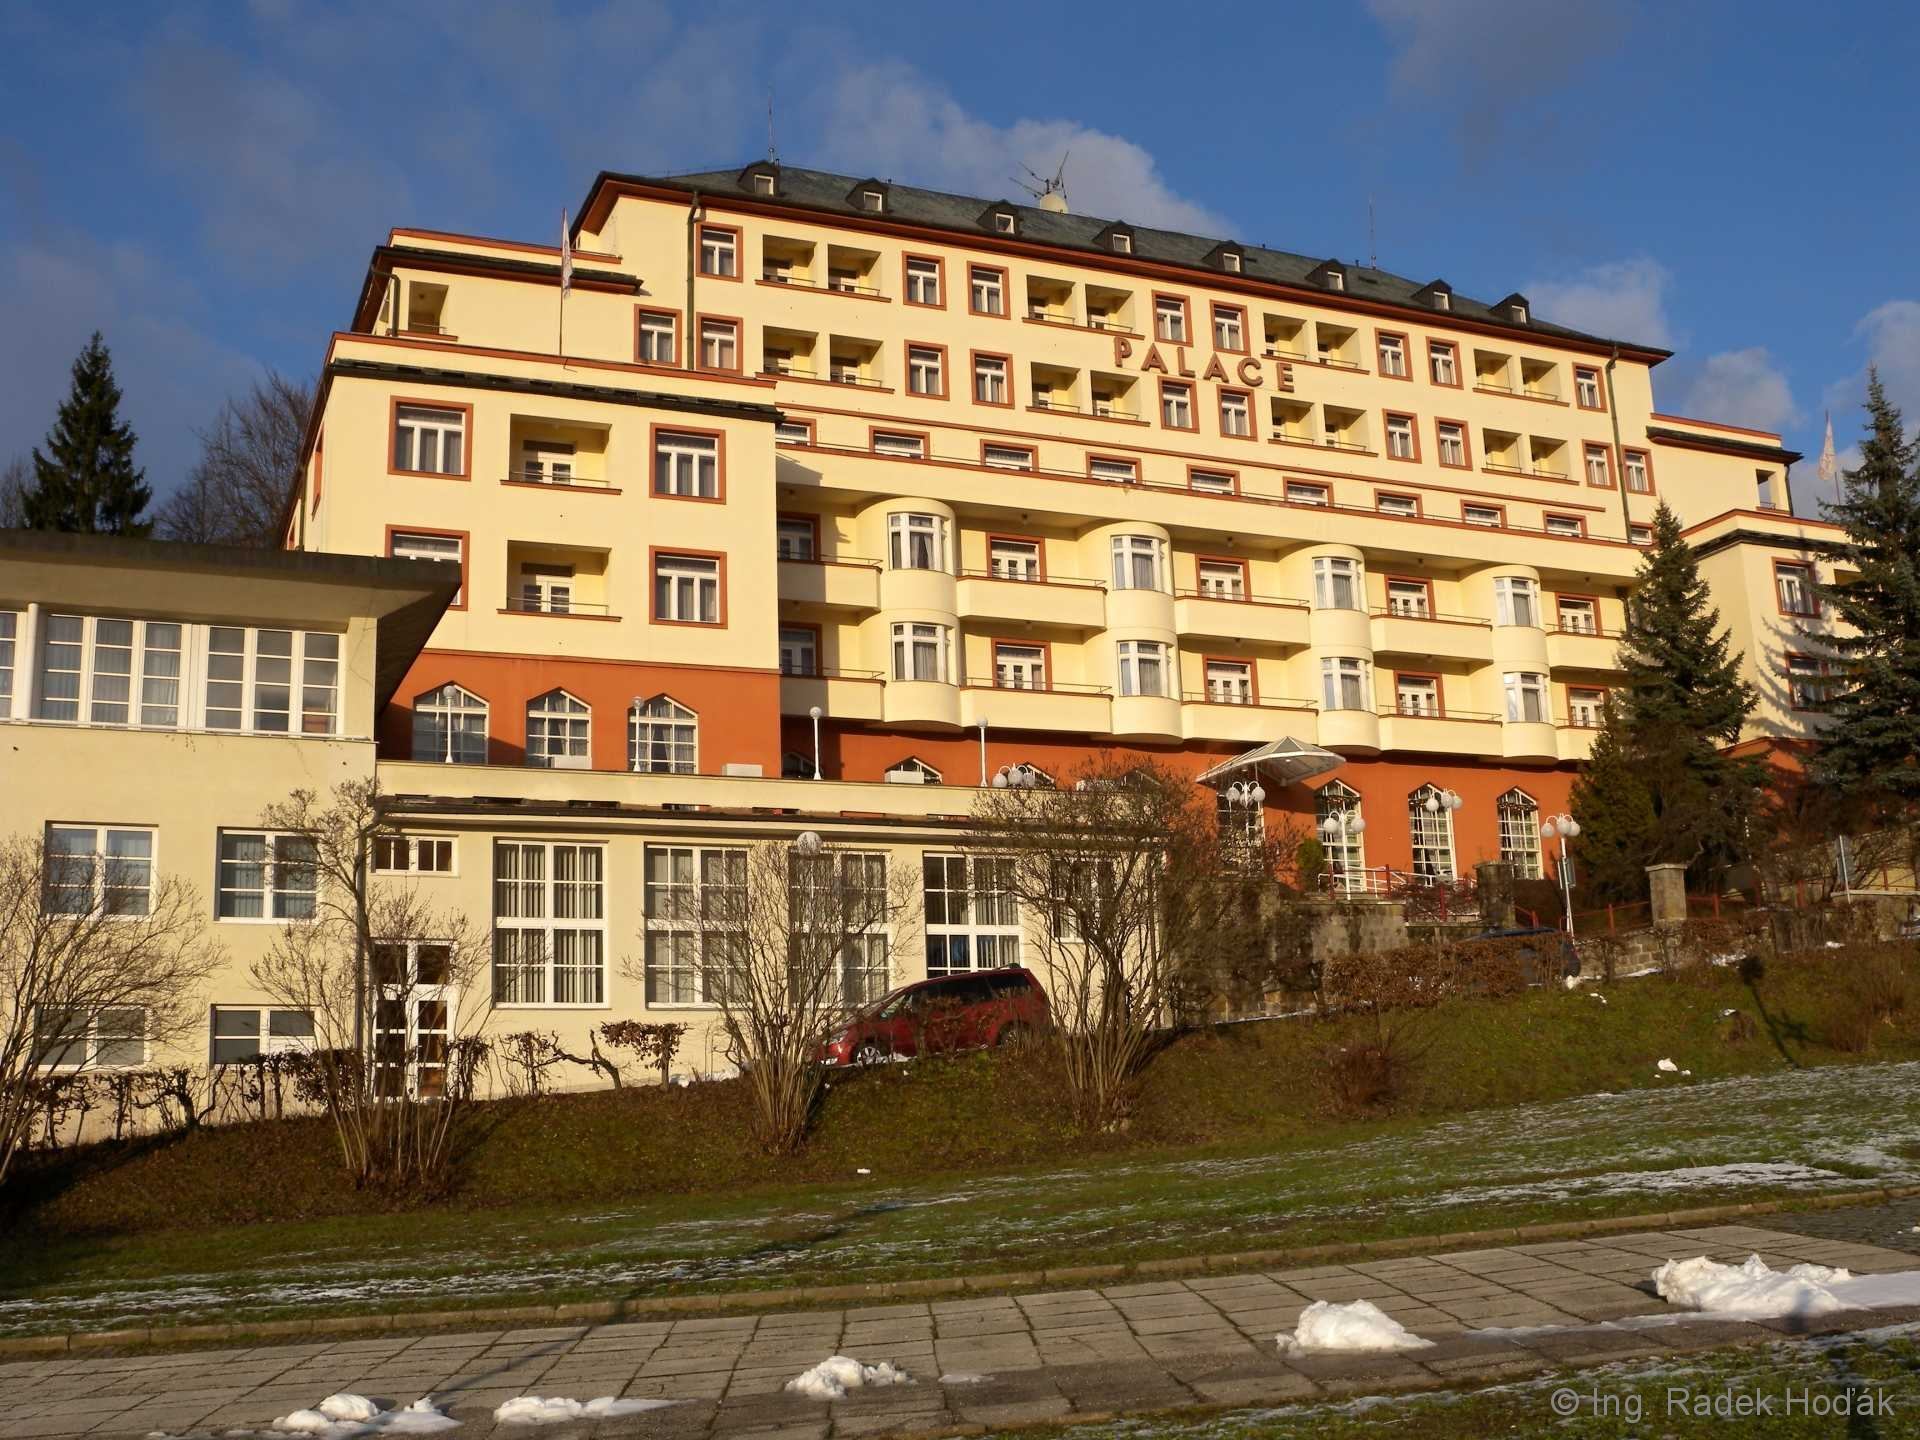 Luhačovice - Palace